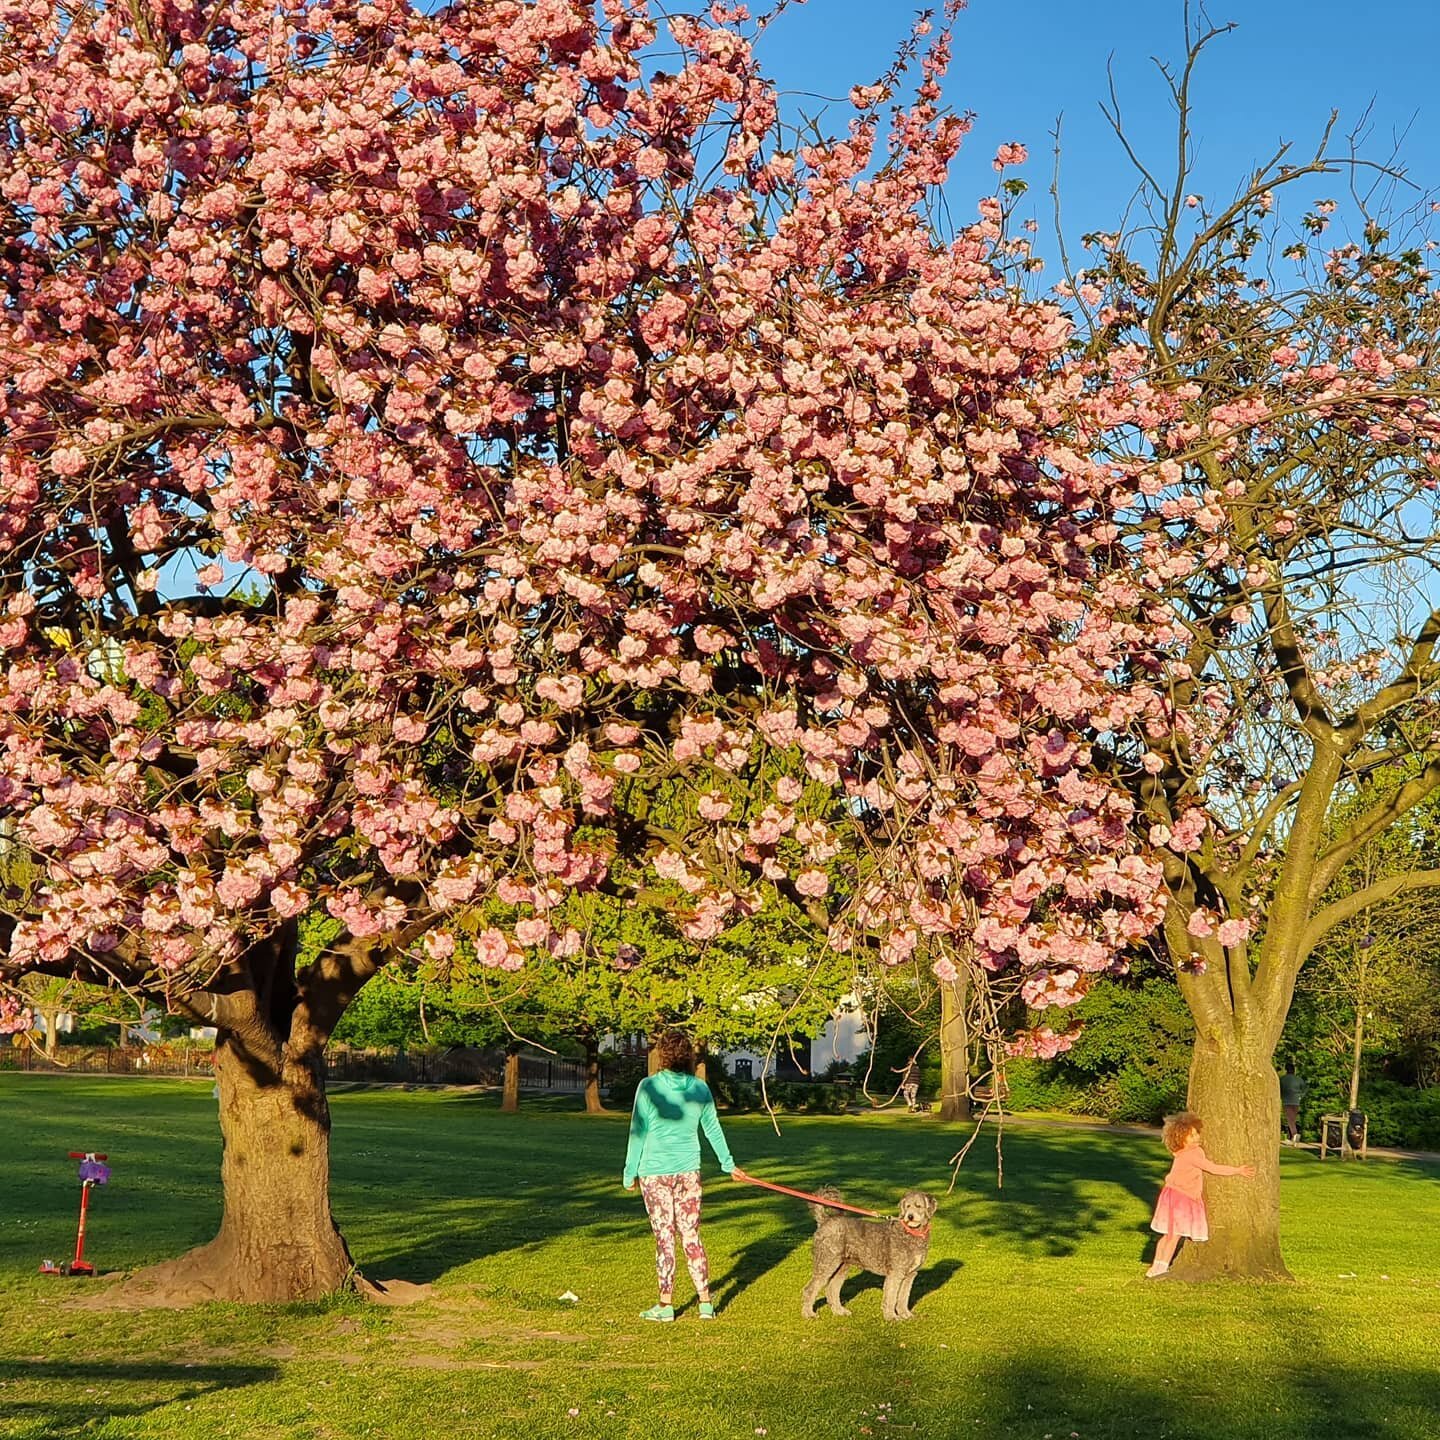 #wormholtpark # sprintime #cherryblossom #trees #spring #shepherdsbush #W12